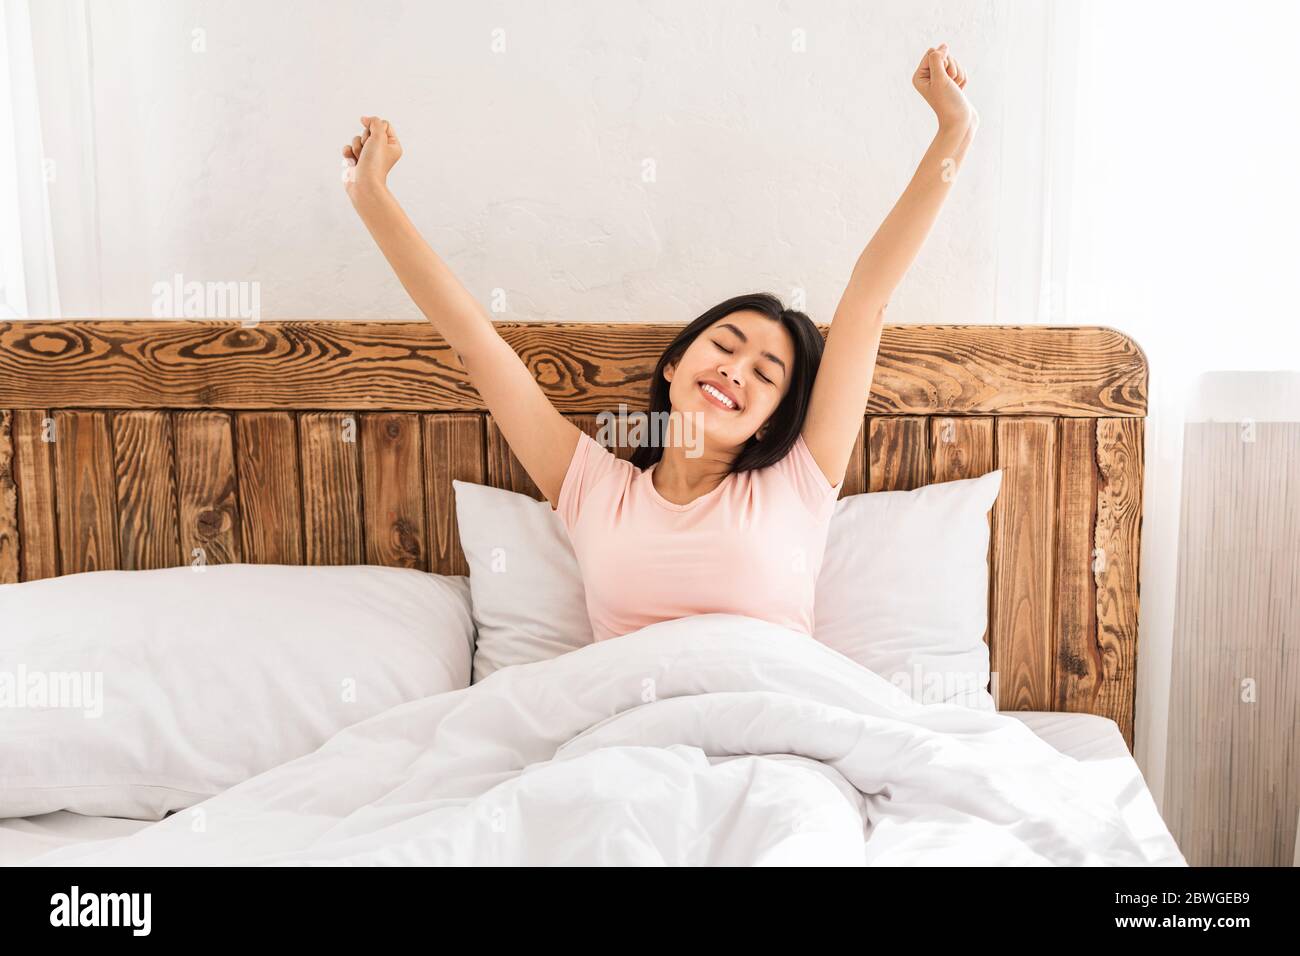 Joyful Woman Waking Up Stretching Hands Enjoying Morning At Home Stock Photo